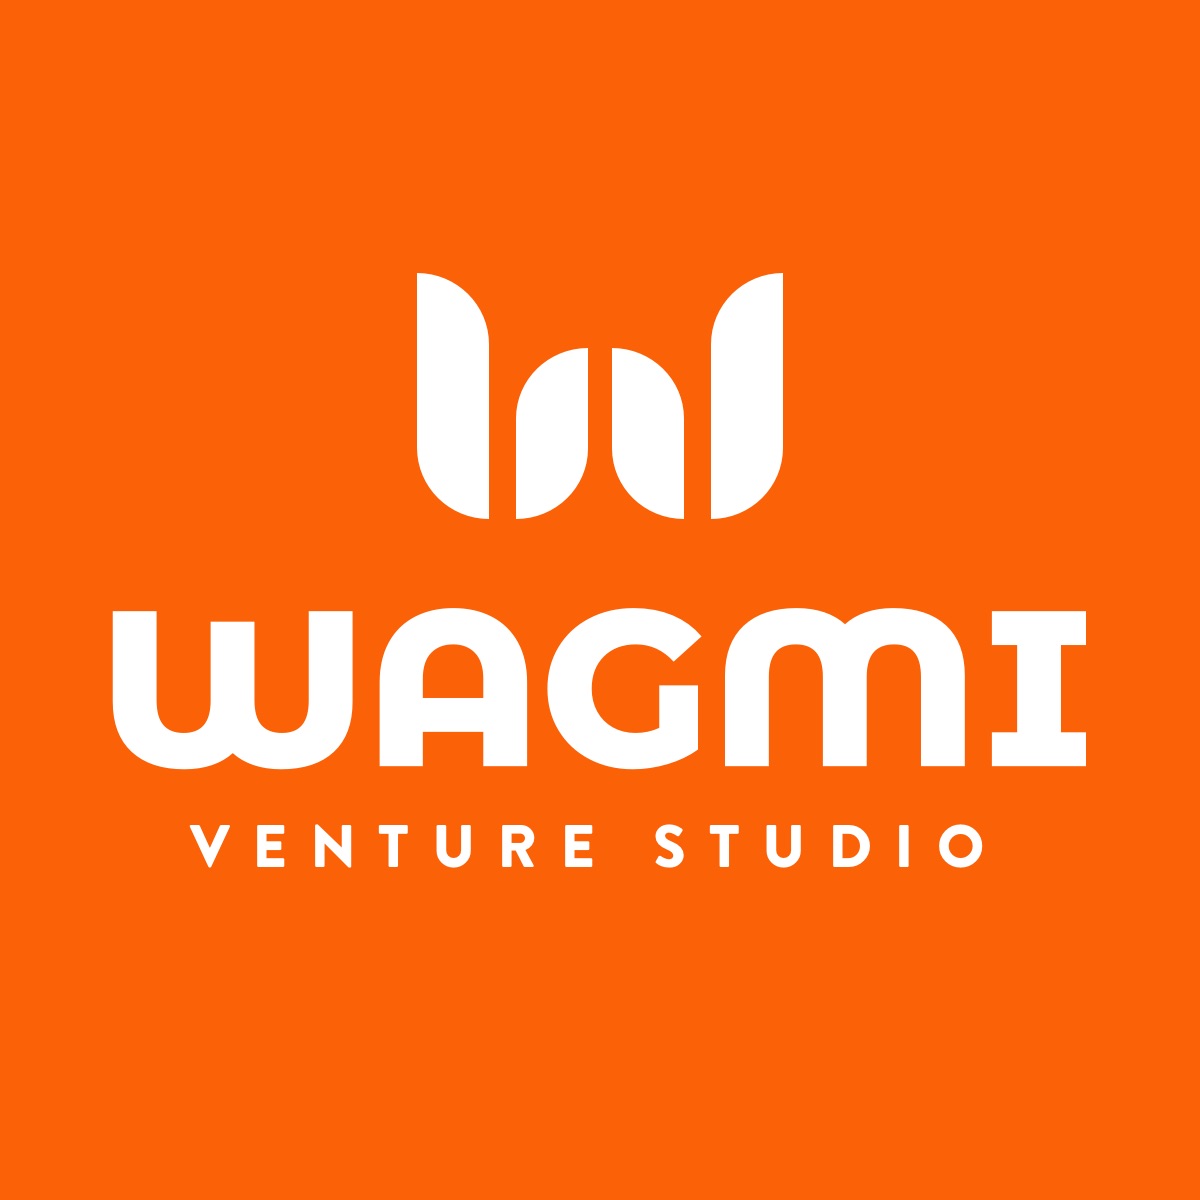 Wagmi Venture Studio